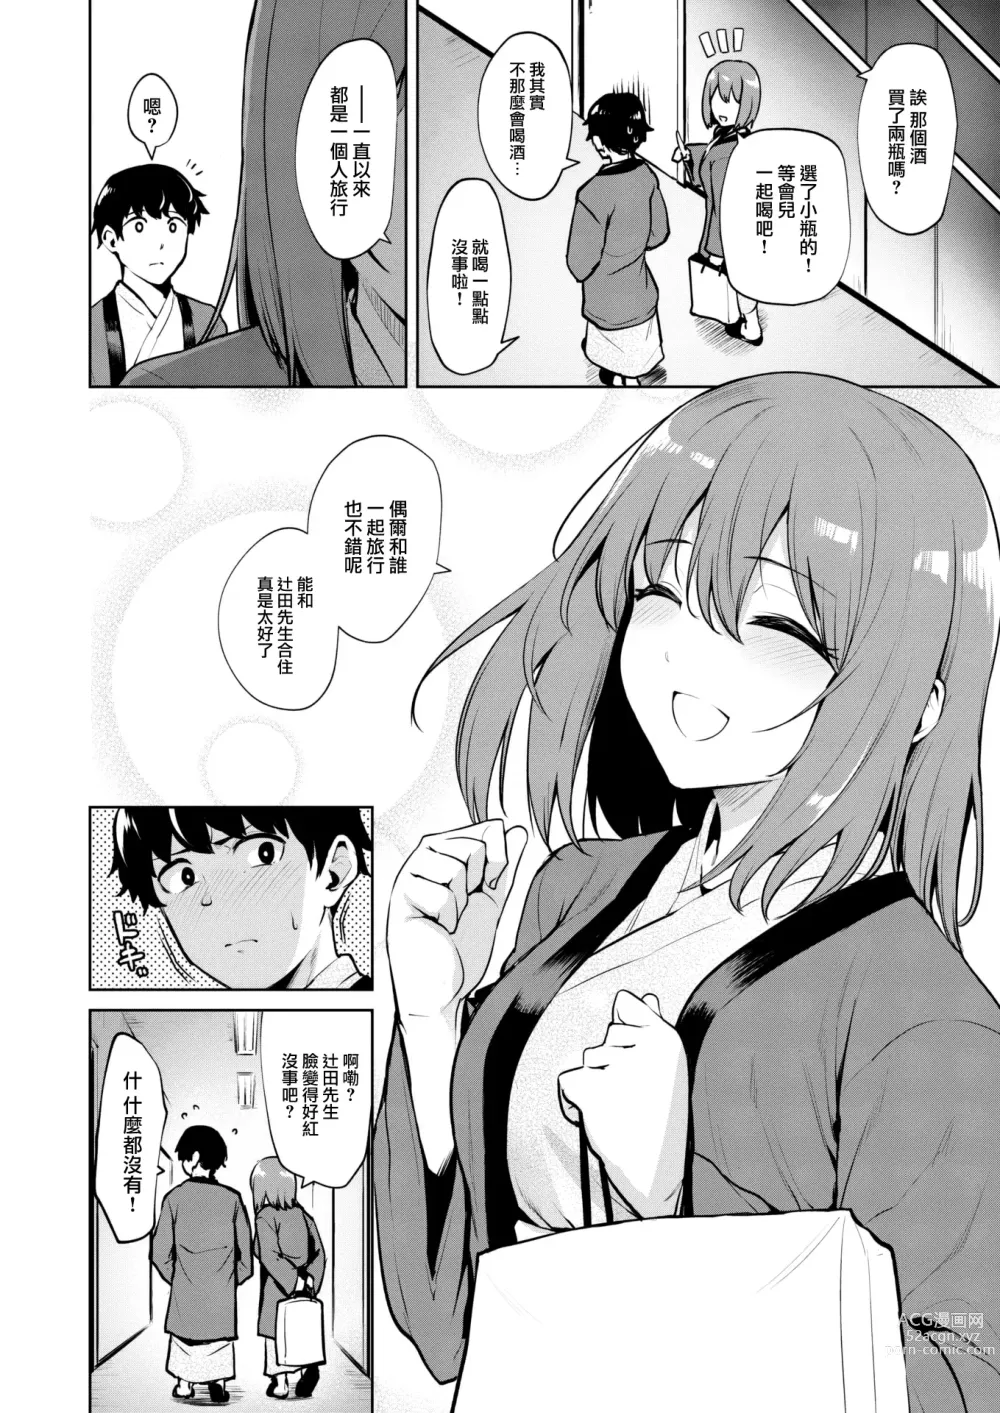 Page 7 of manga Shinnmitsu